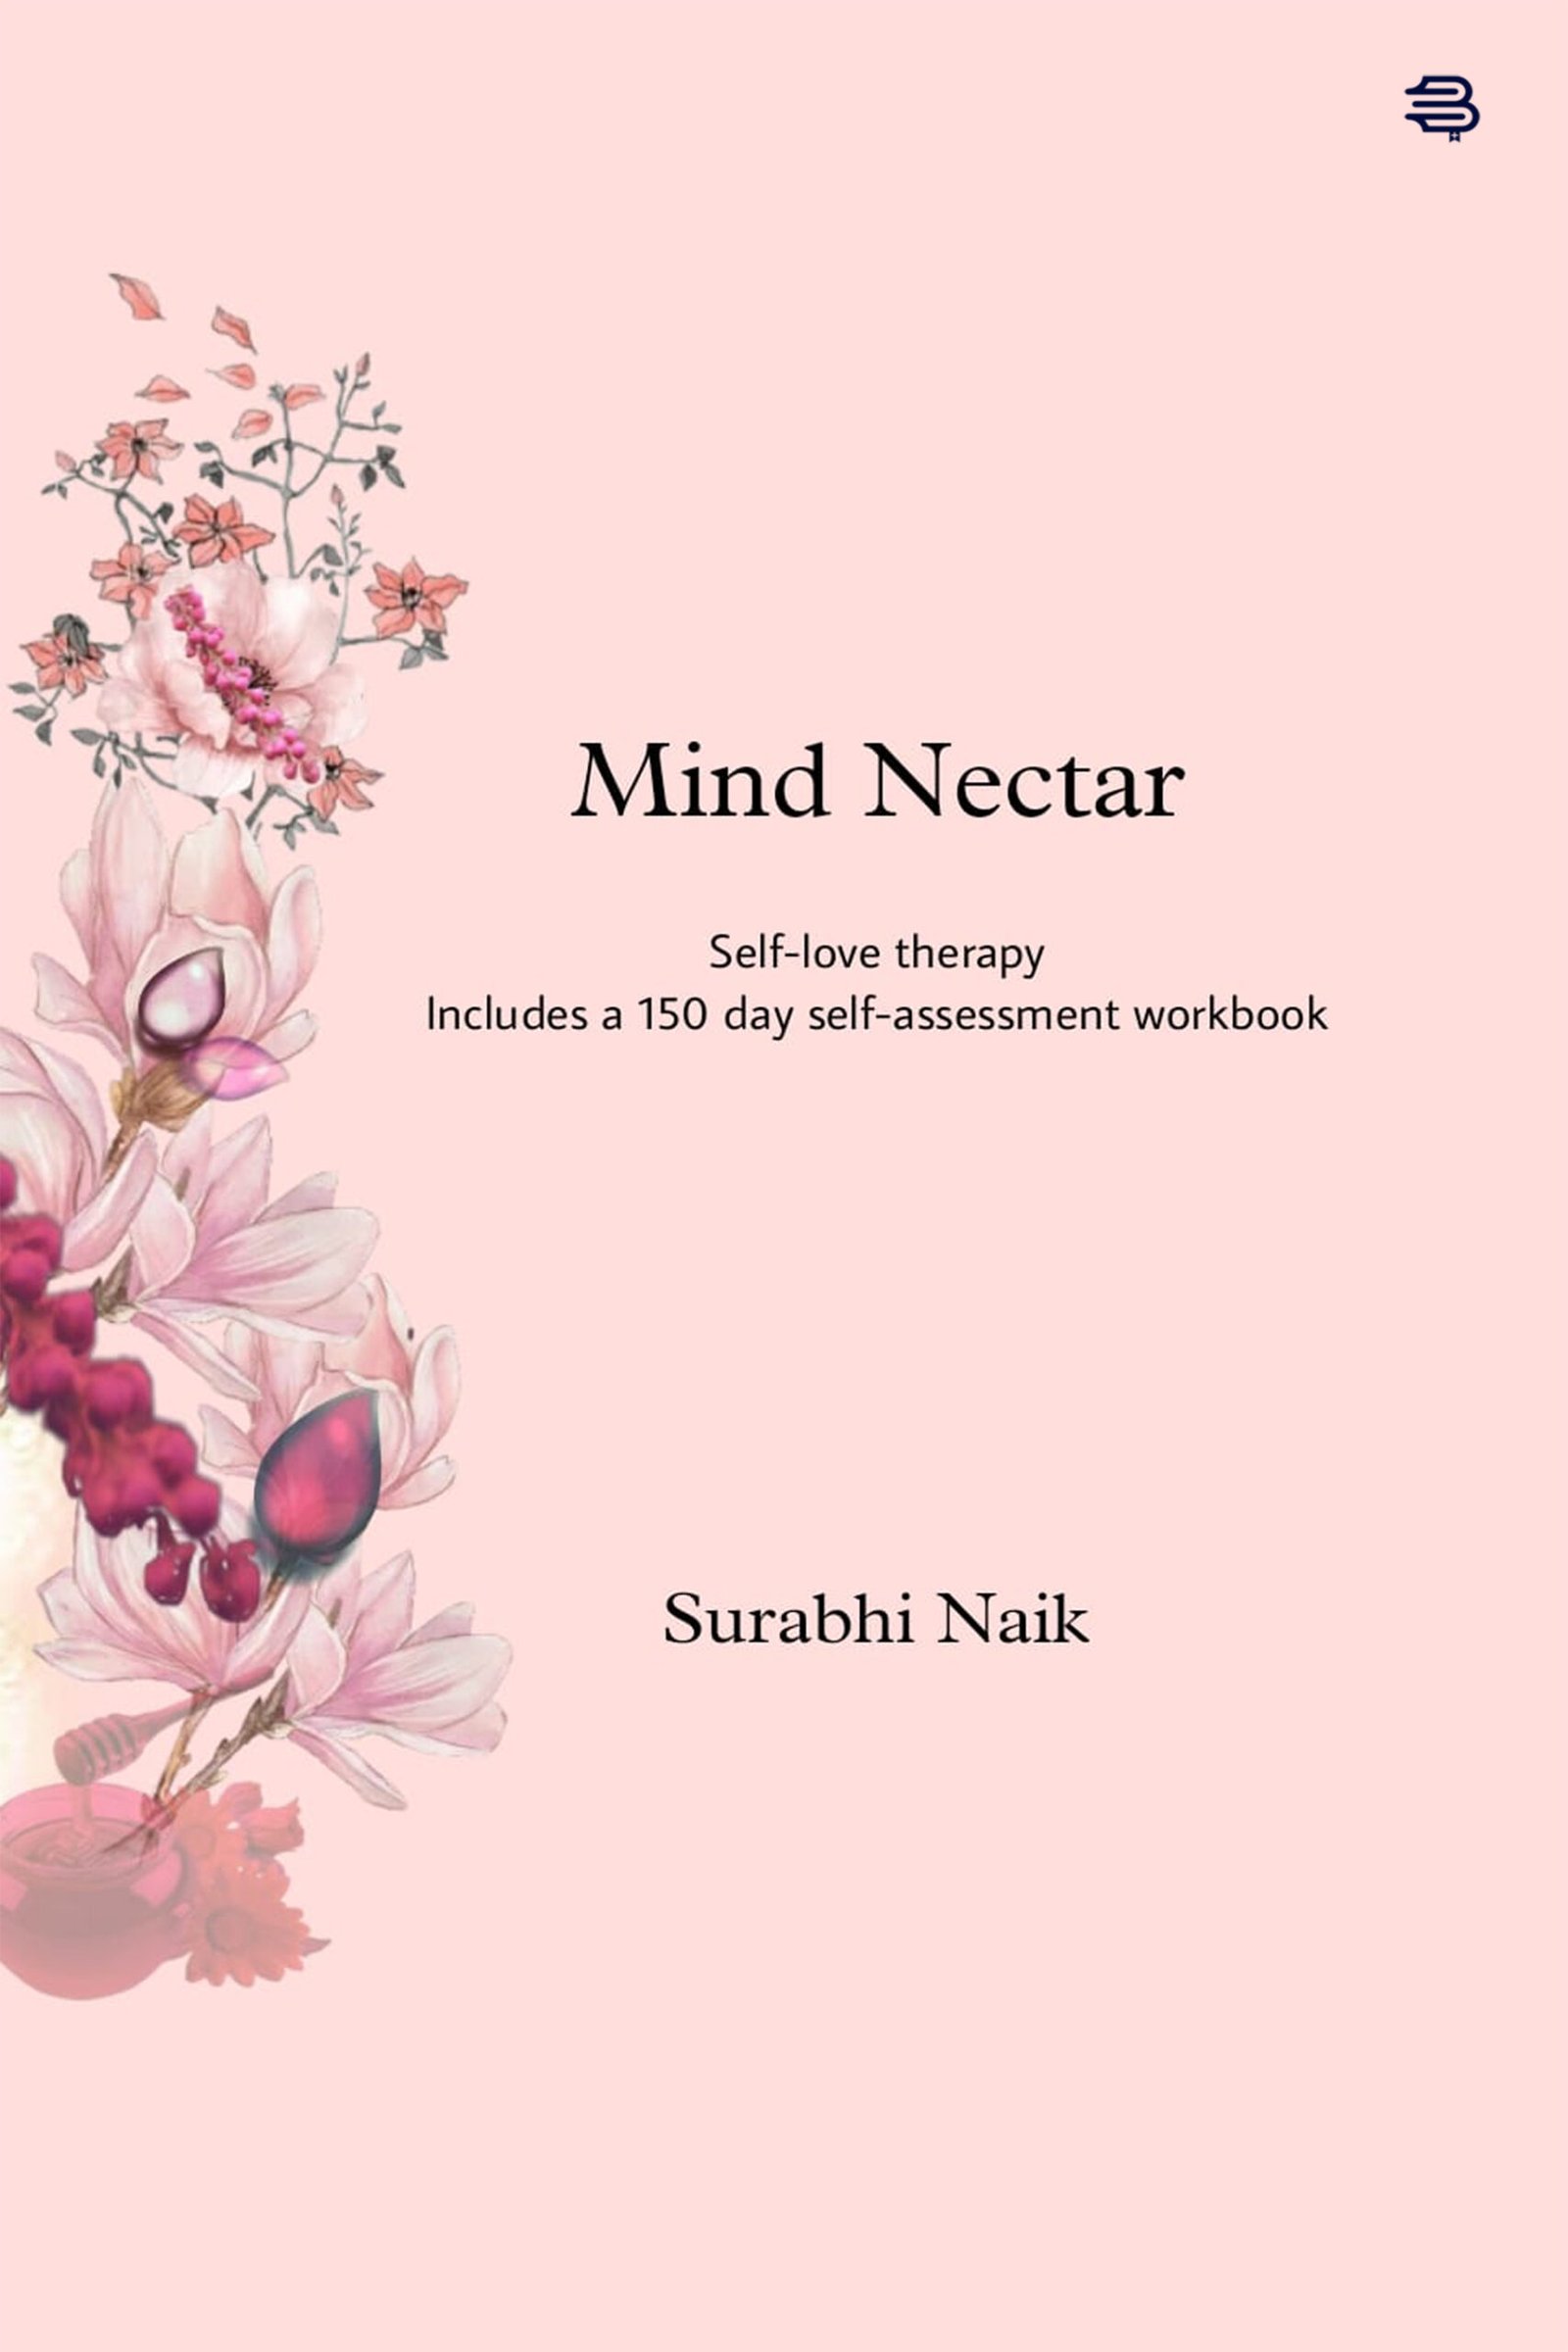 MIND NECTAR by (Surabhi Naik)